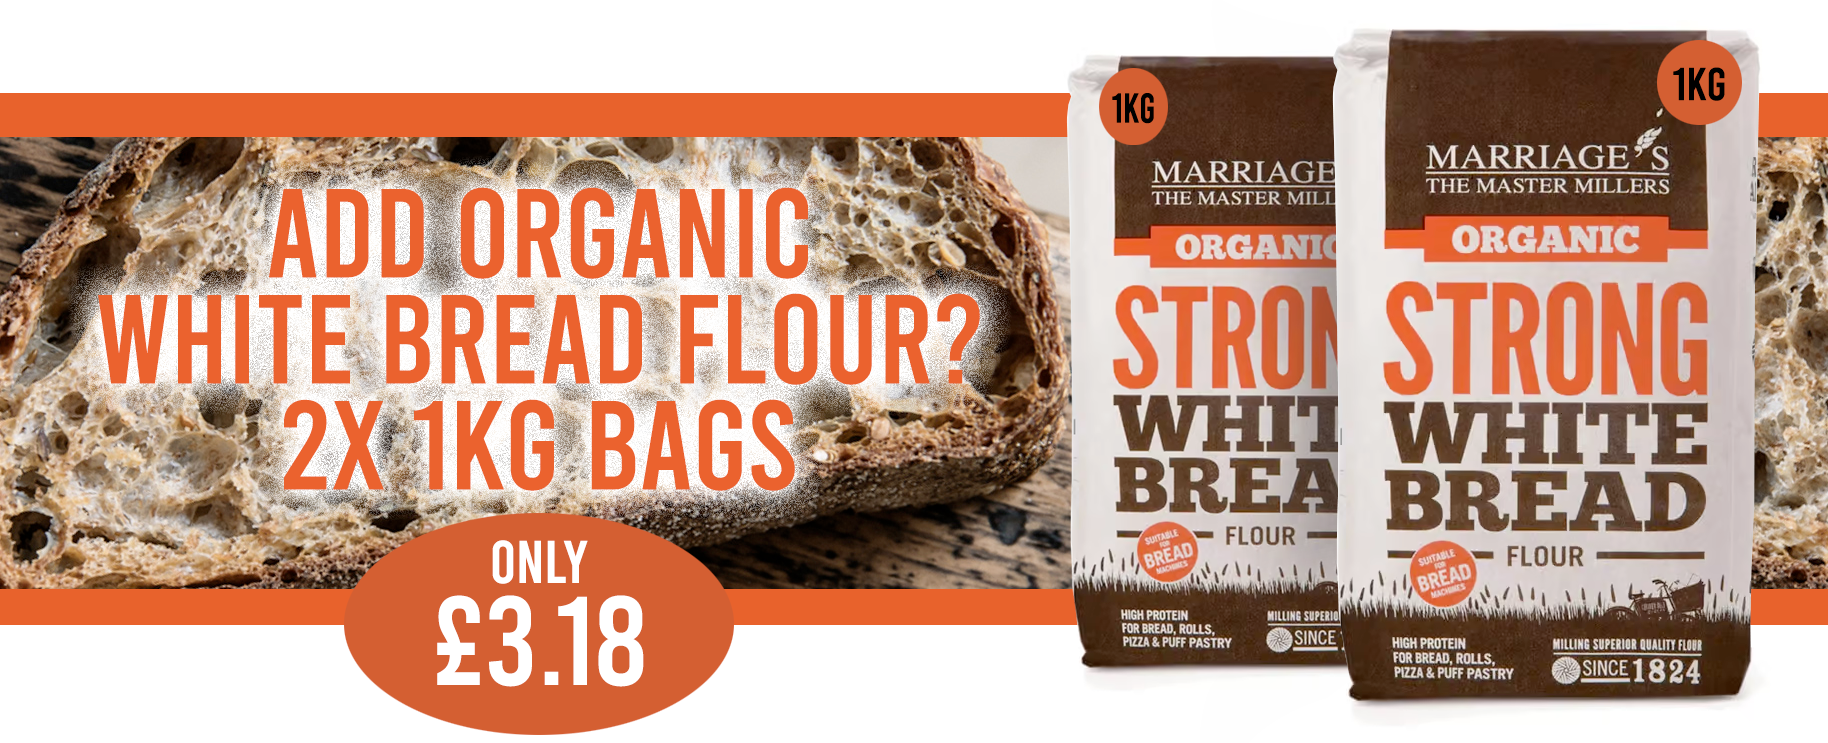 Add some organic bread flour?